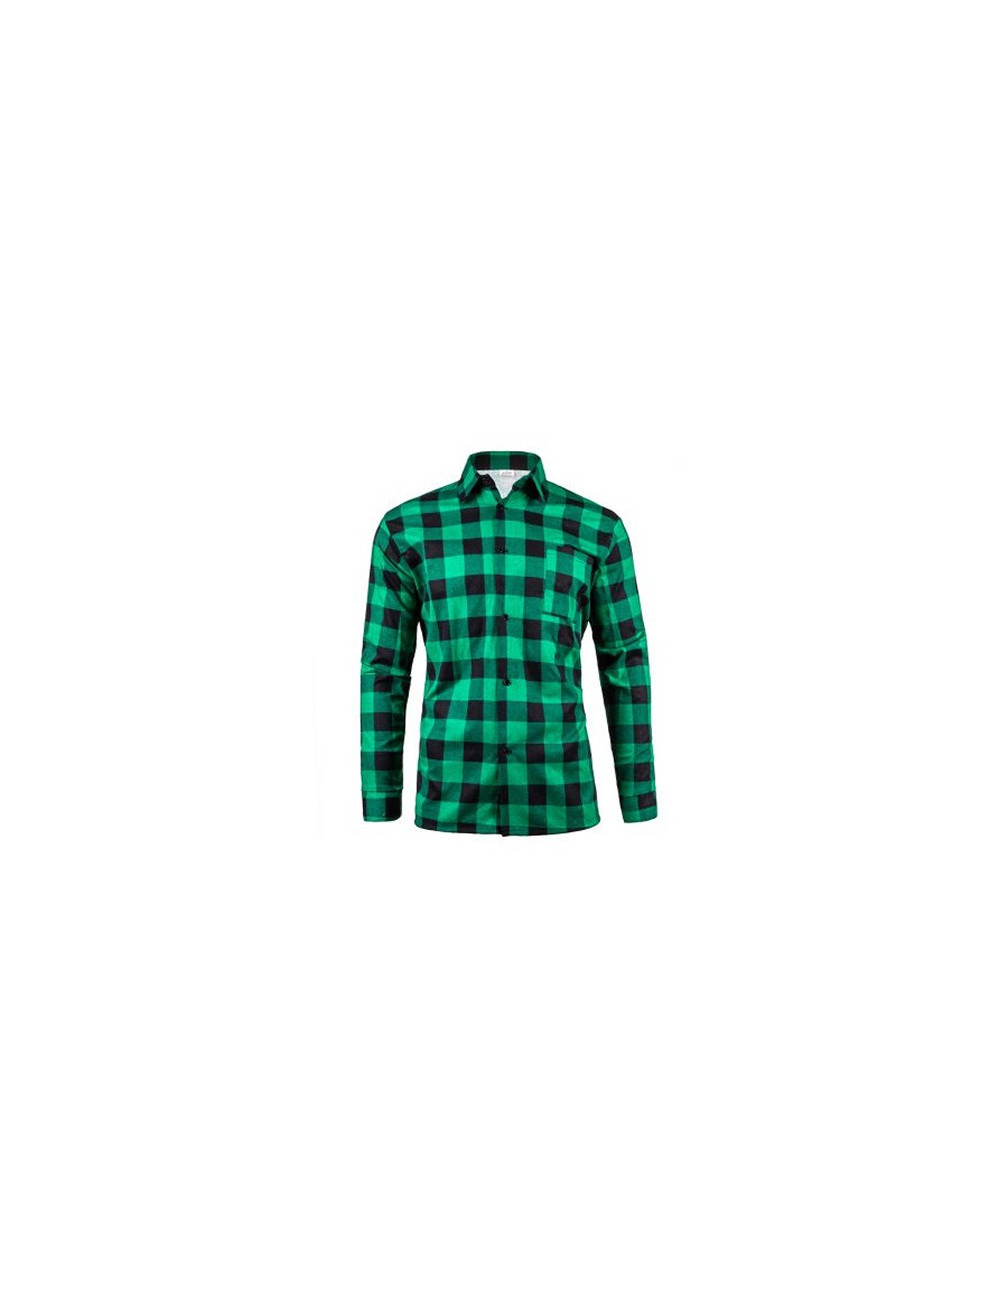 Green flannel shirt Jhk